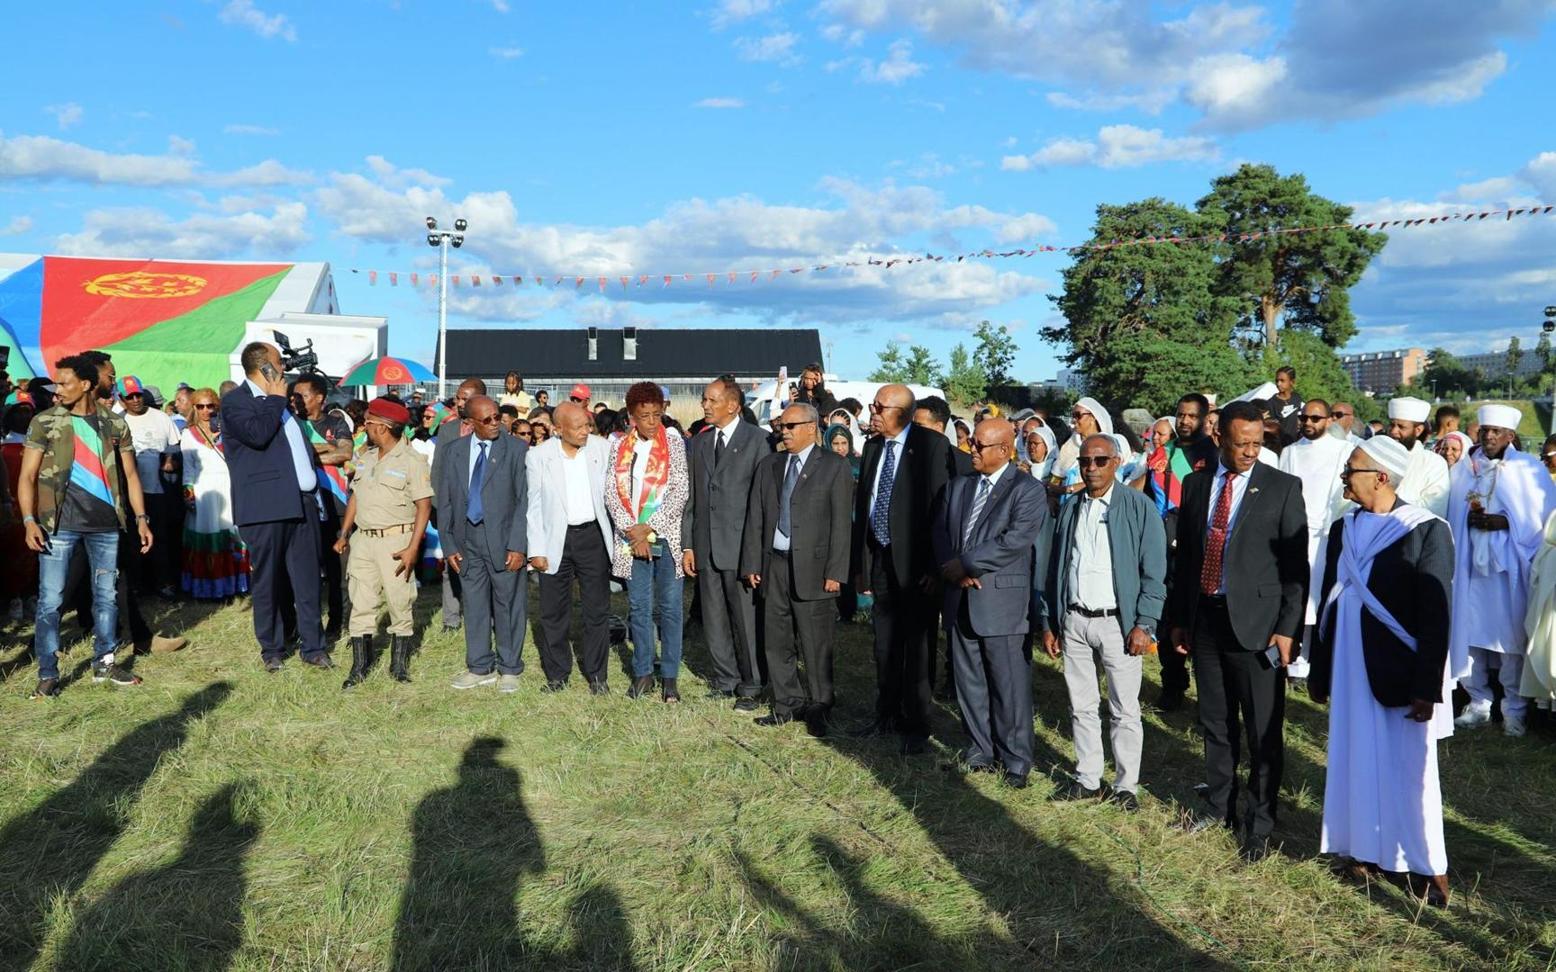 Eritrean community festival in Scandinavian countries